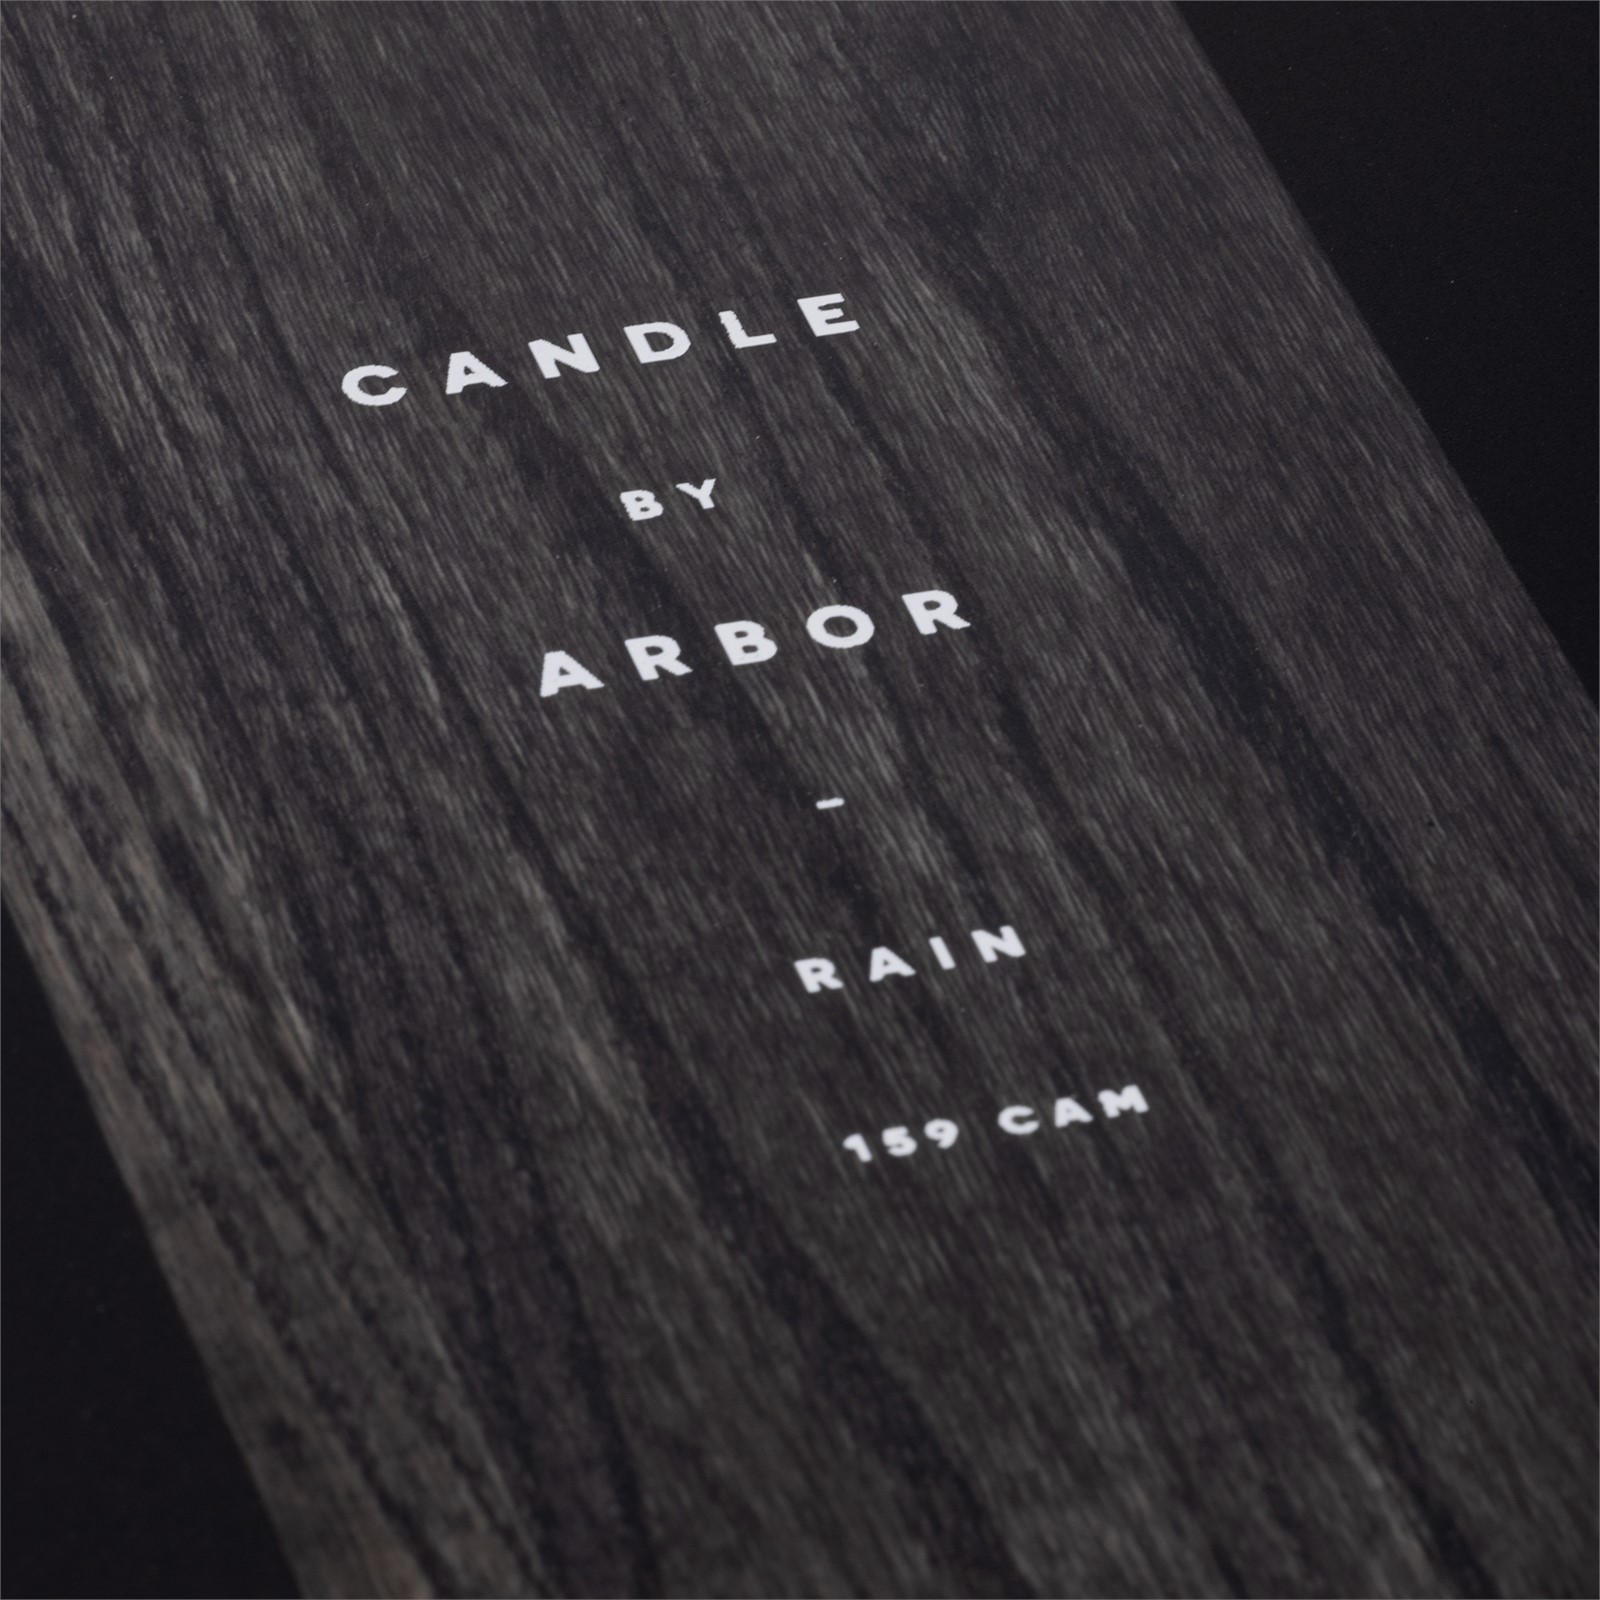 Candle Rain Camber 23/24